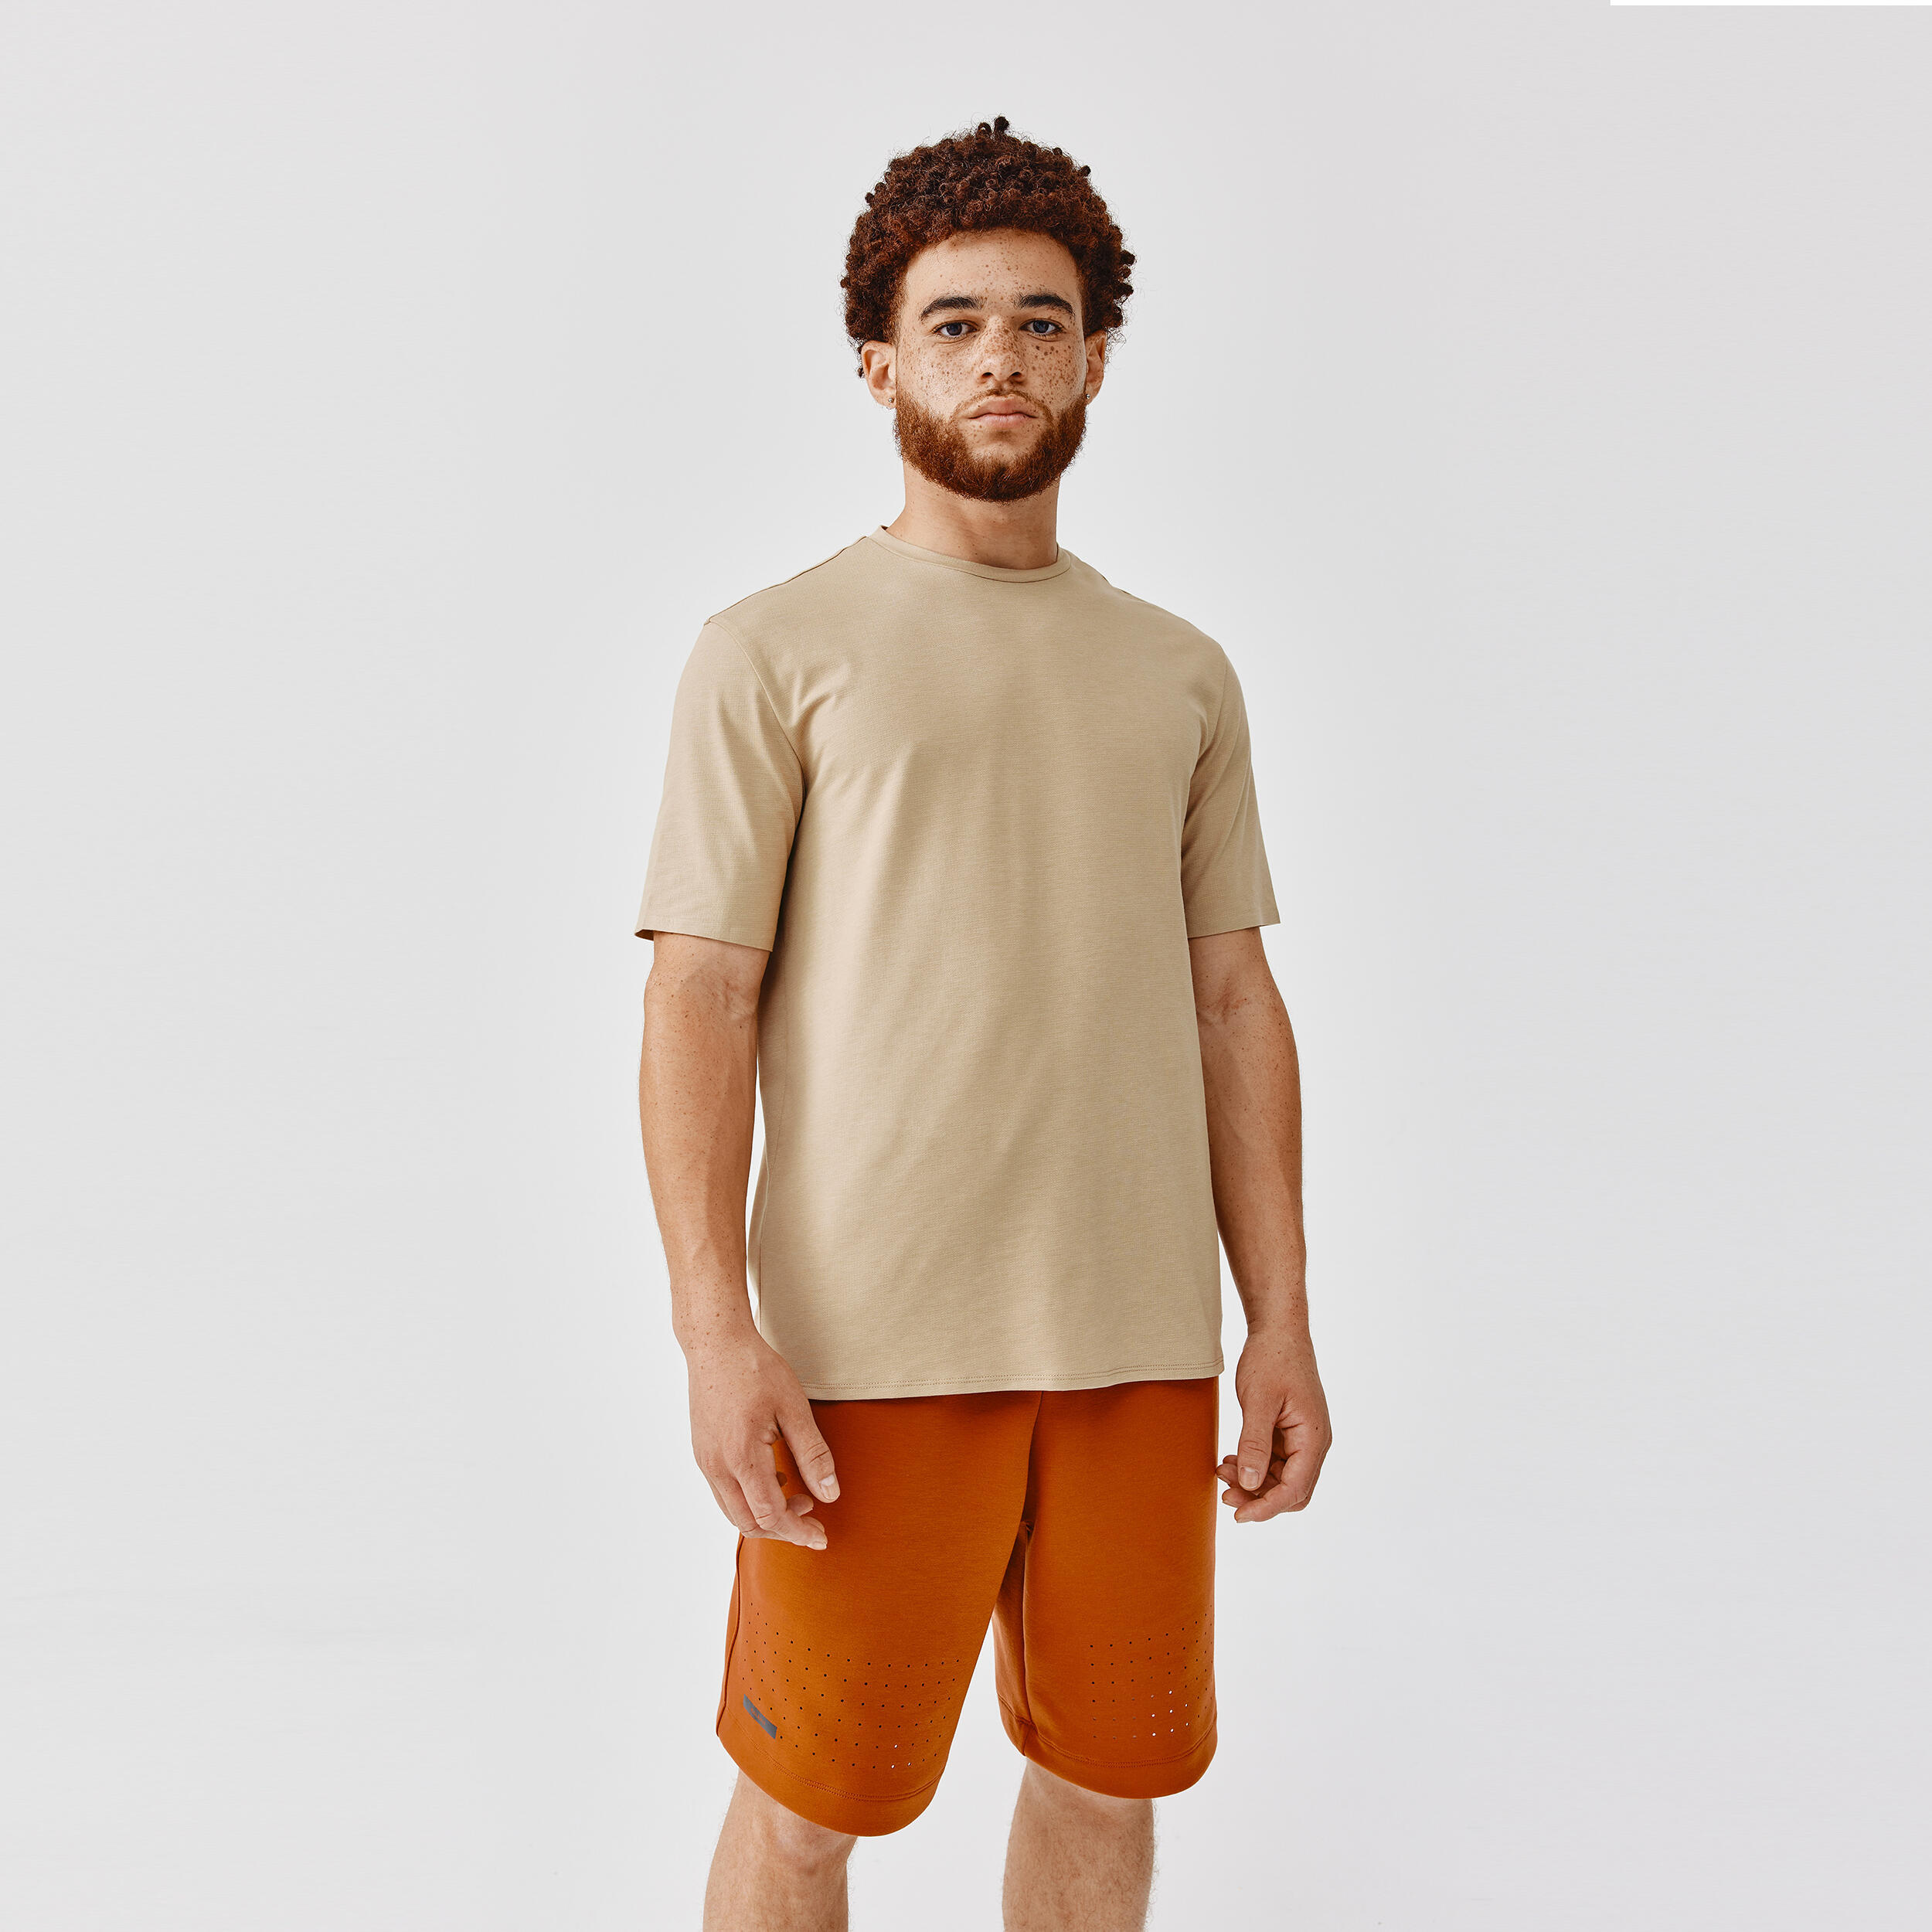 KALENJI Men's Breathable T-Shirt Soft - beige